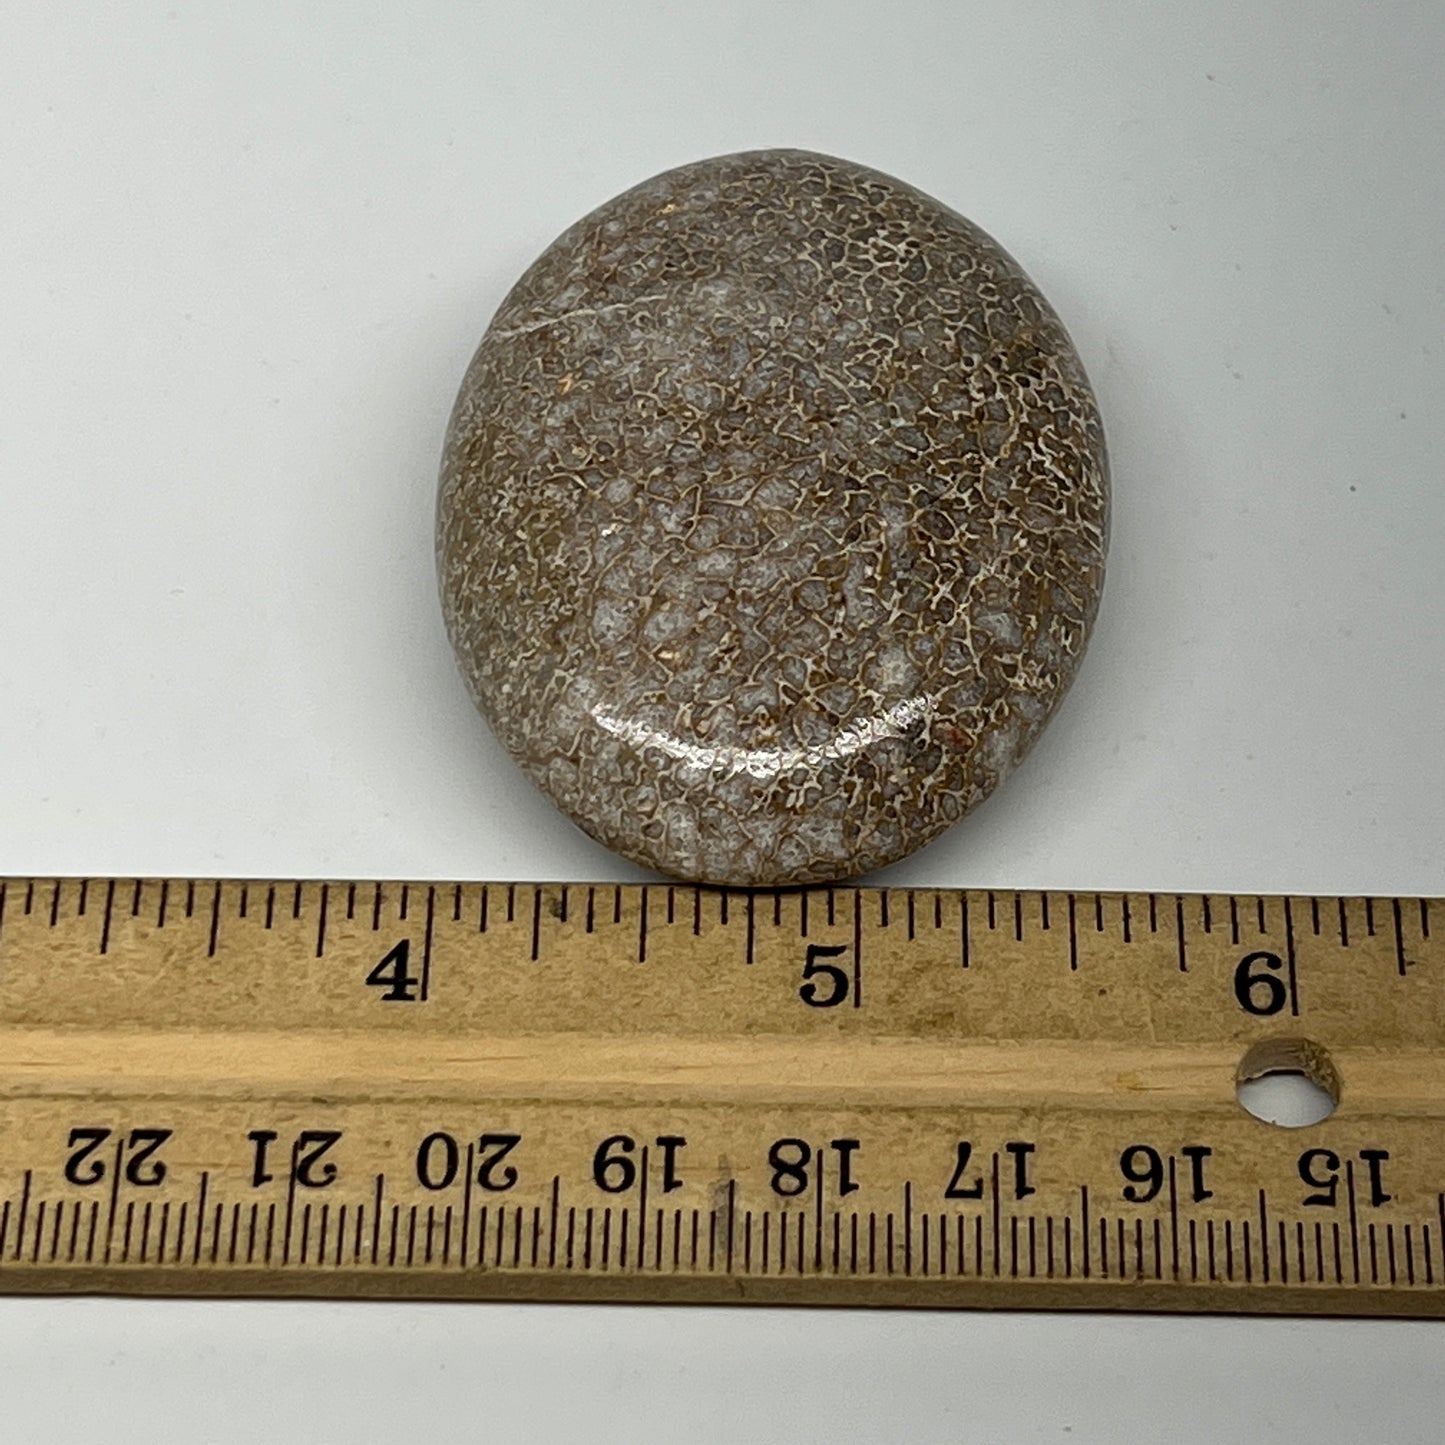 59.9g,2.2"x1.7"x0.8", Small Dinosaur Bones Palm-Stone from Morocco, B20482